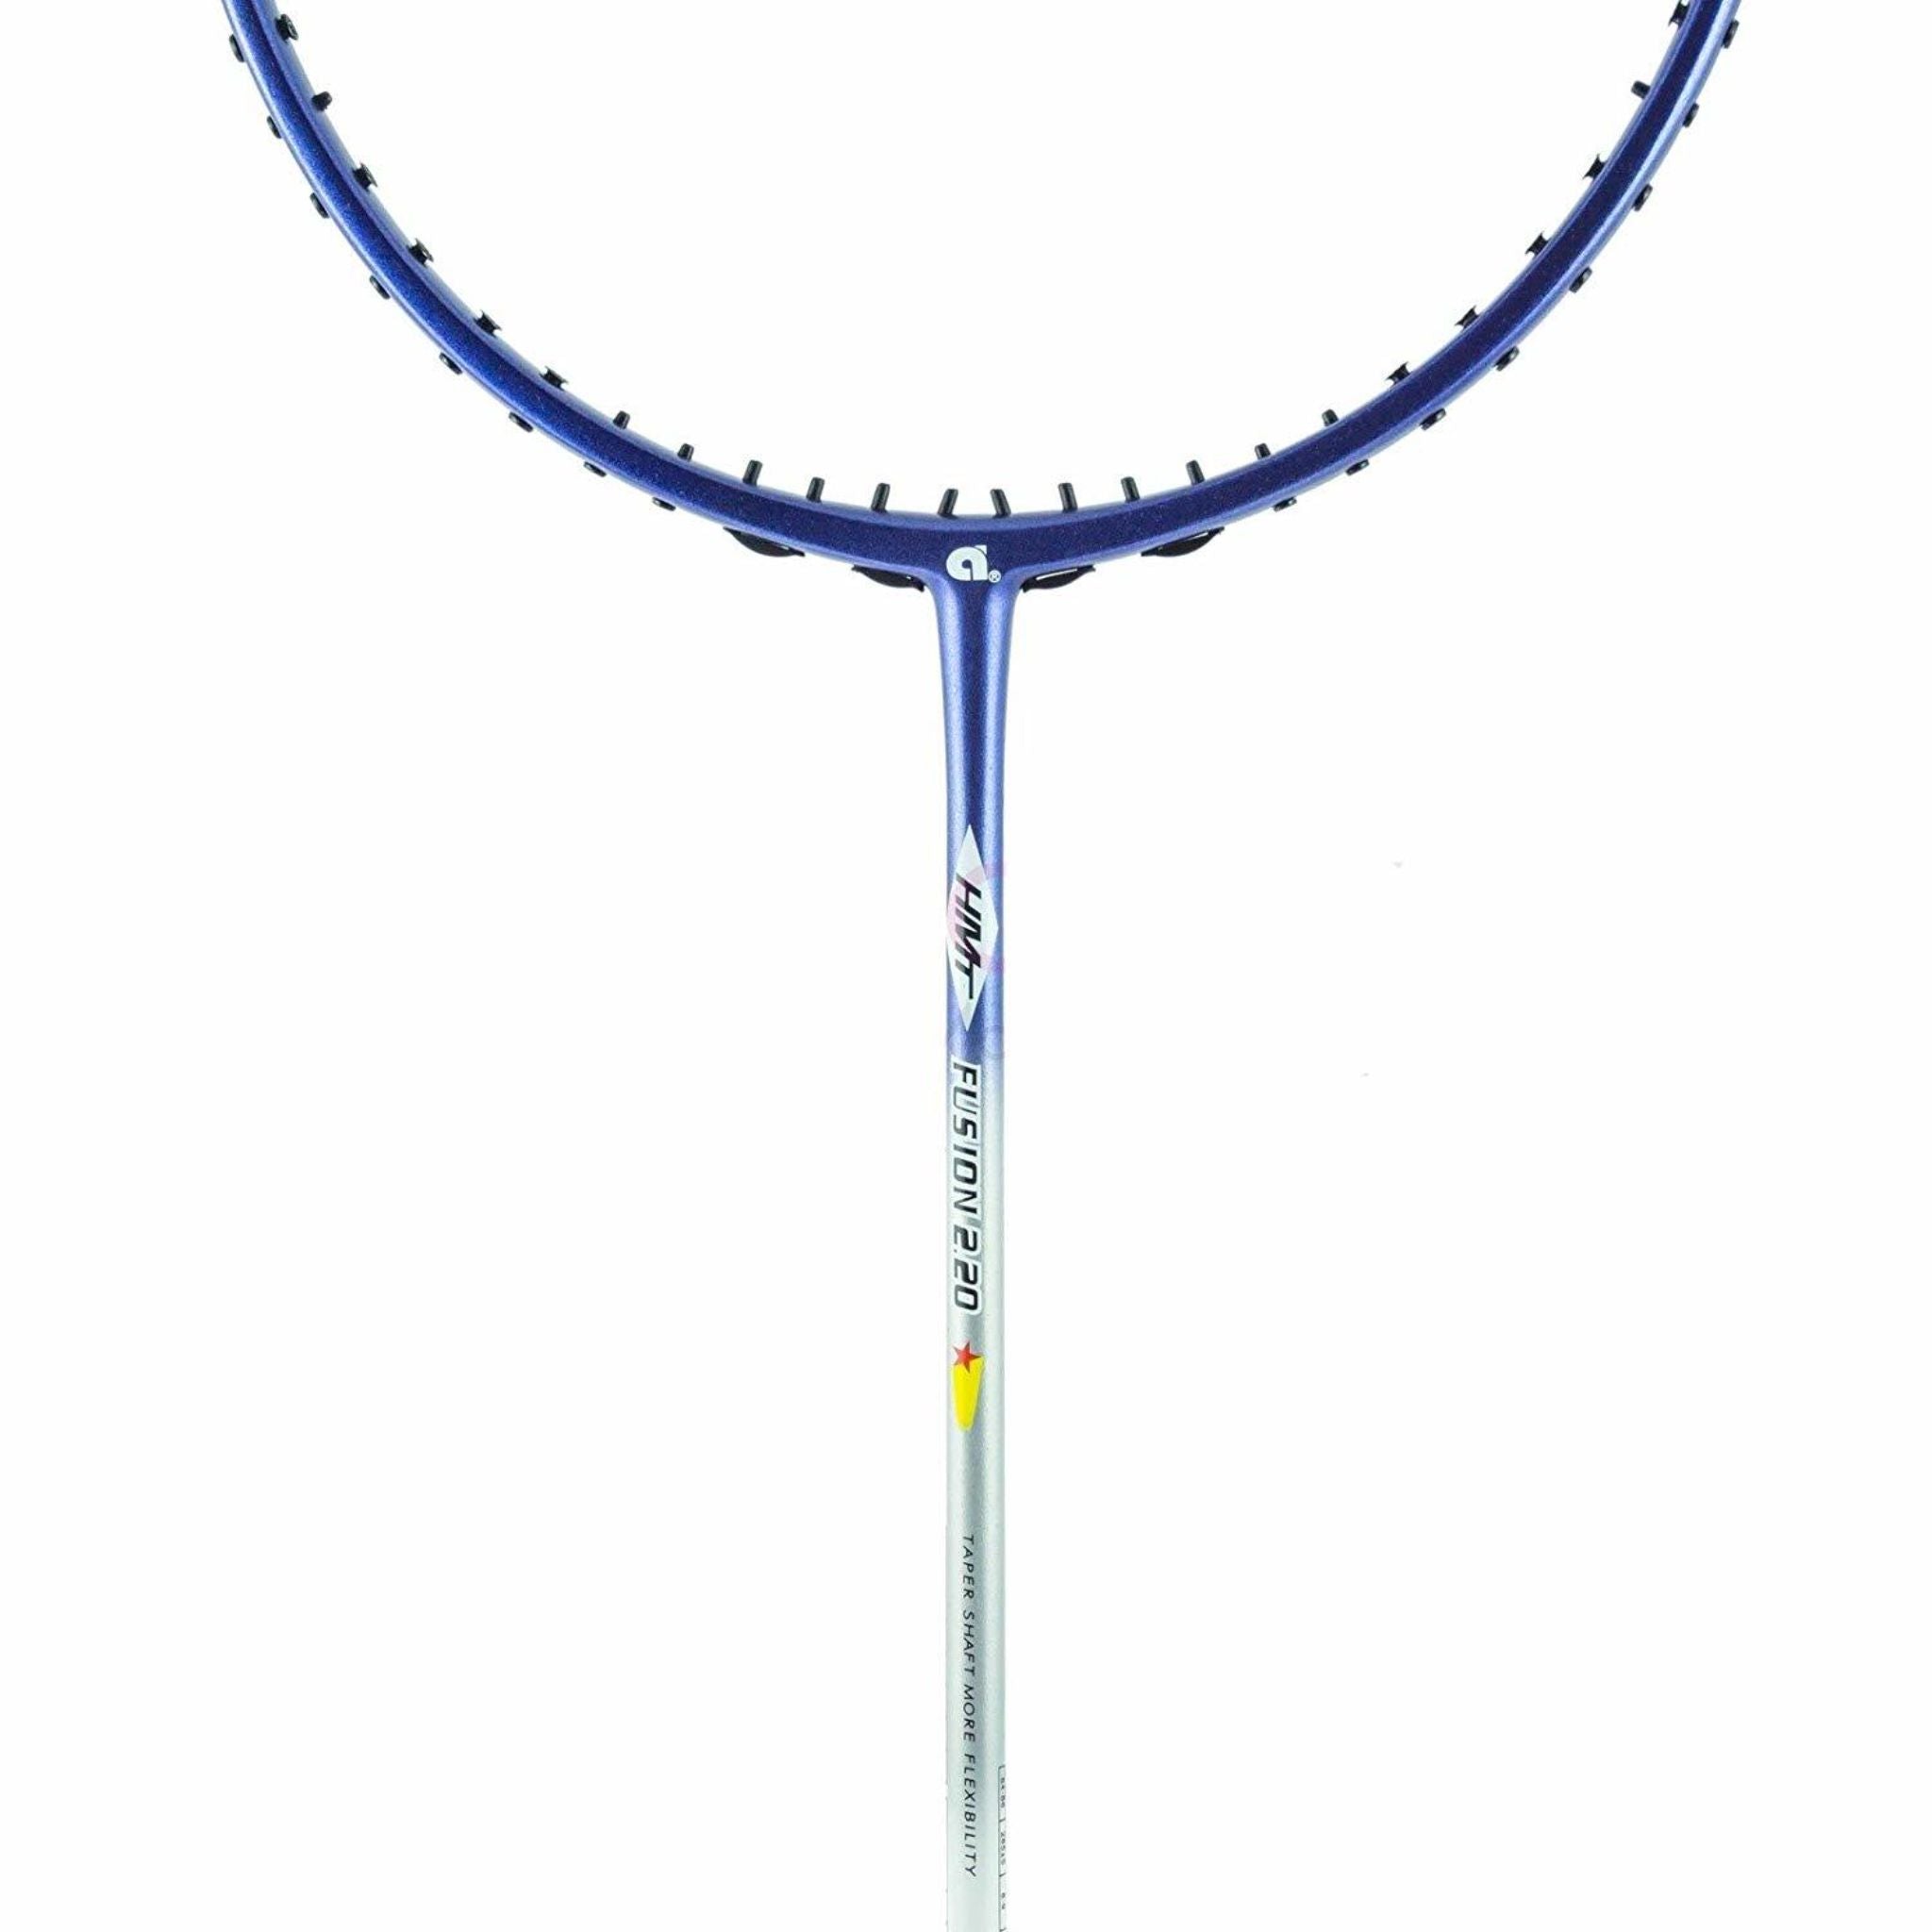 Original One Star Kawasaki High Quality Badminton Racket